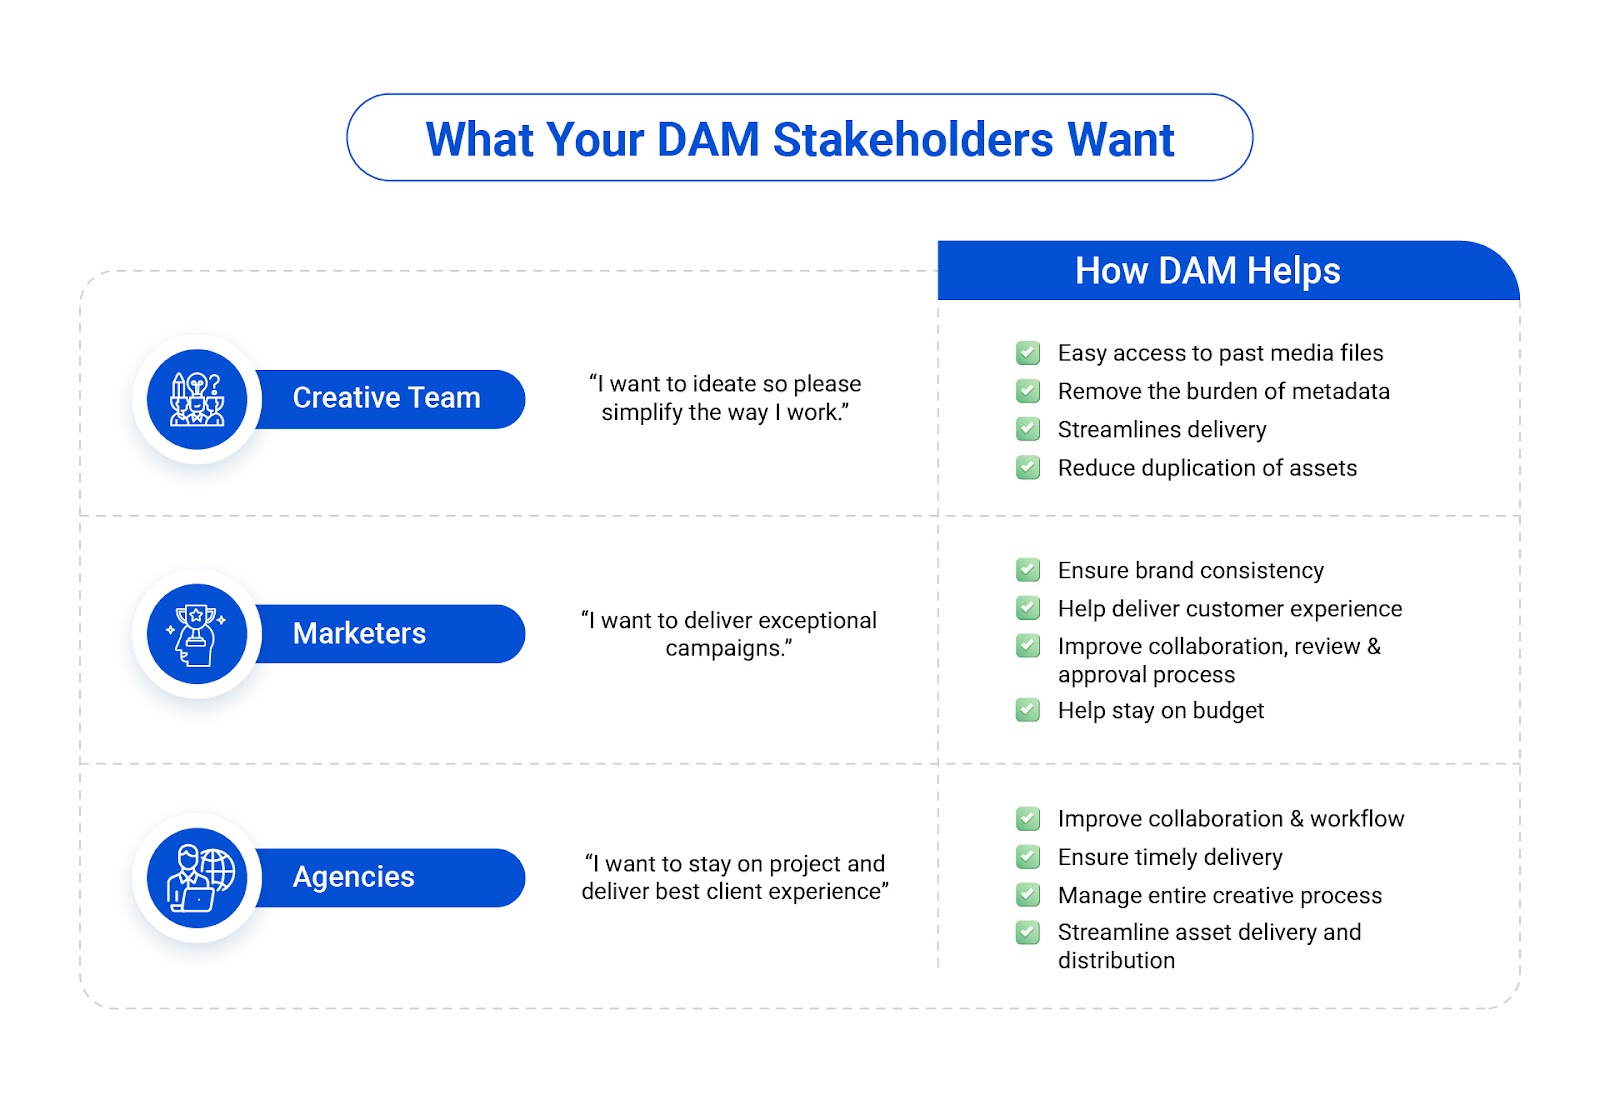 How DAM helps various stakeholders